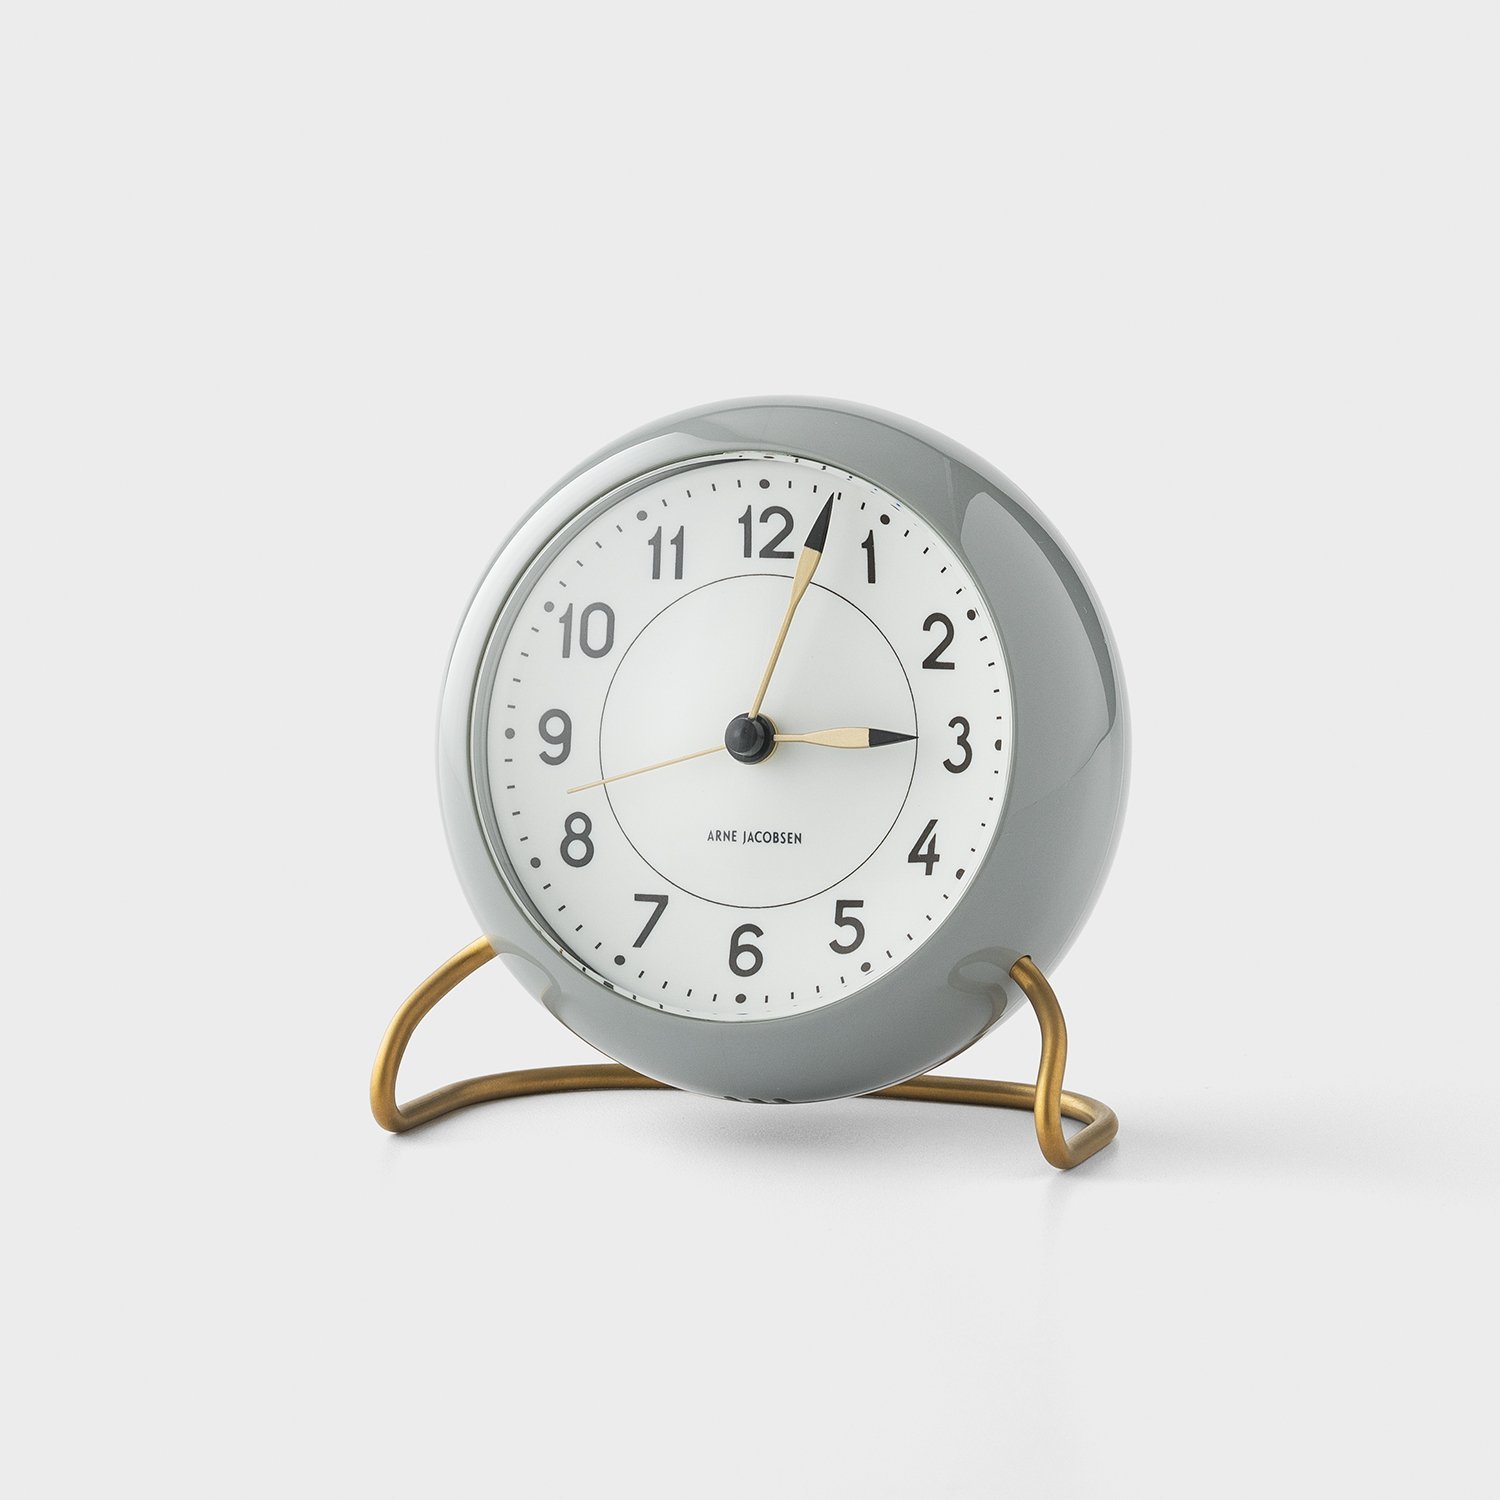 Schoolhouse Arne Jacobsen Alarm Clock